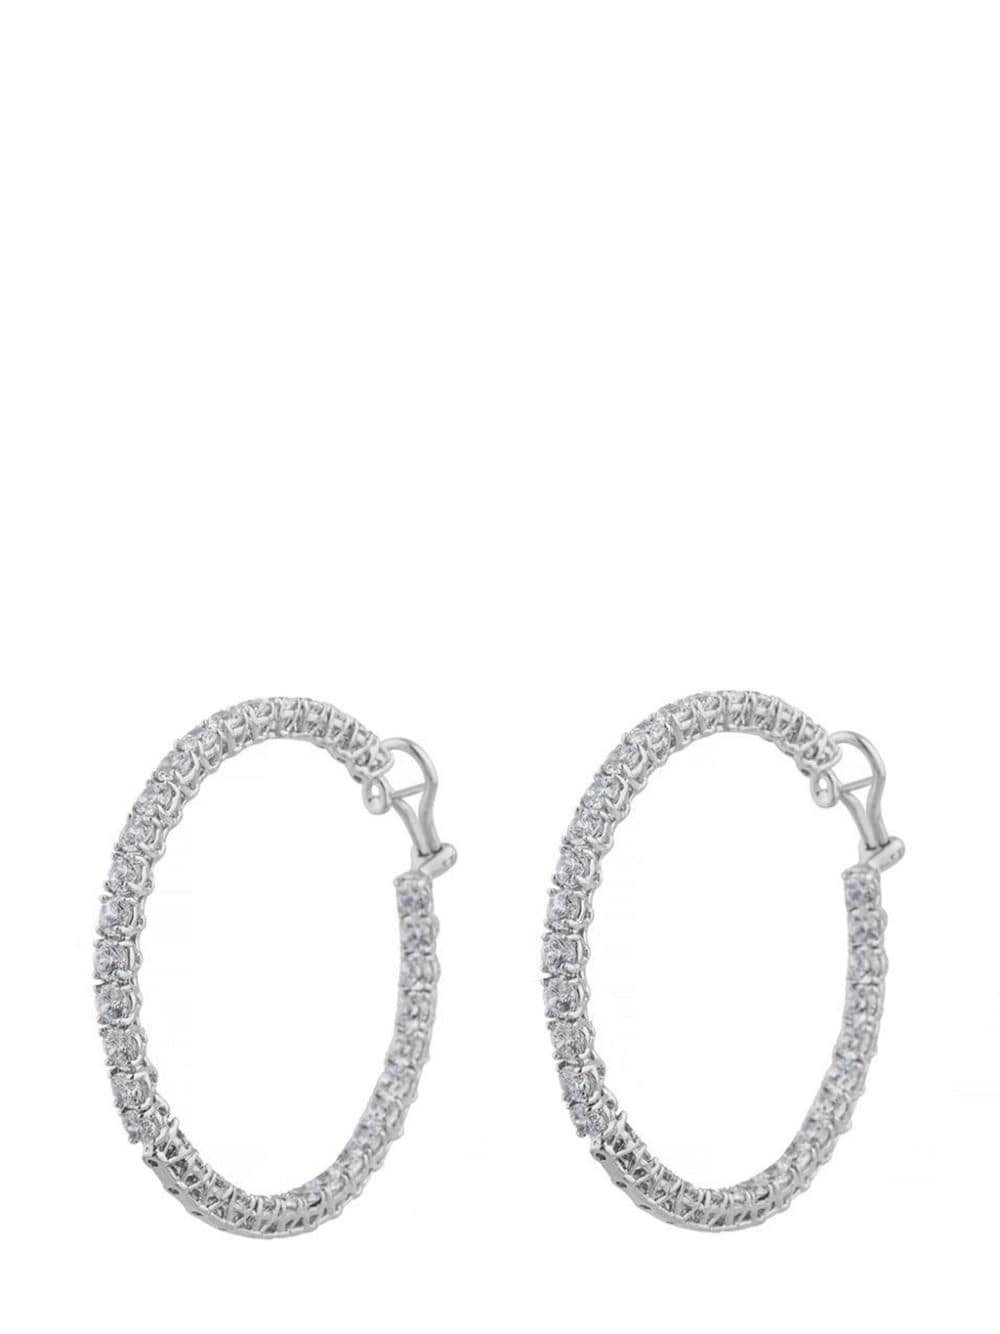 Fantasia By Deserio Embellished Hoop Earrings In White